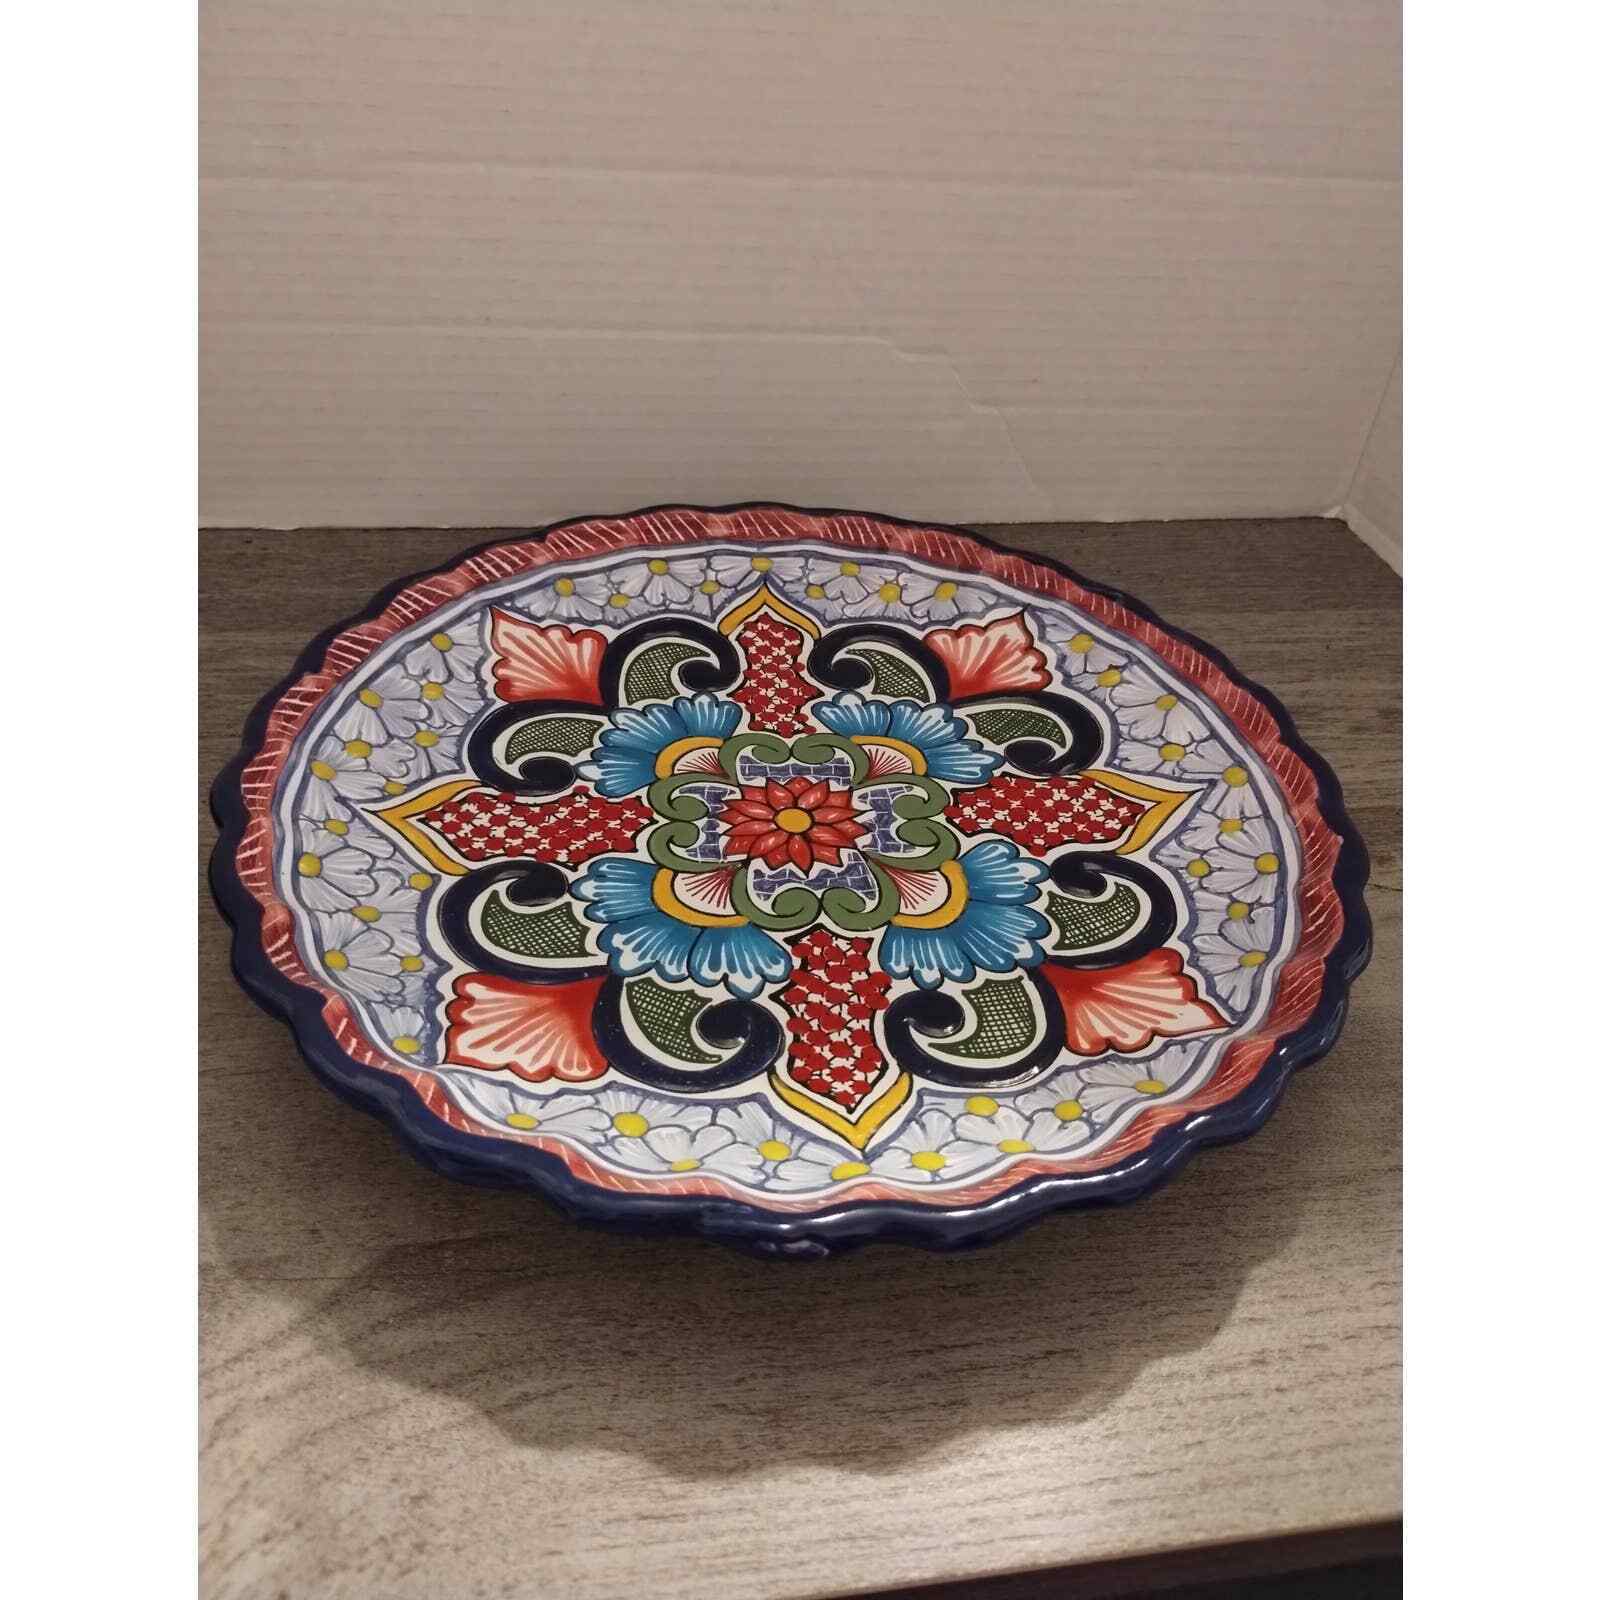 Del Angel Mexico Ceramic Pottery Plate Wall Hanging Folk Art 11 1/2”